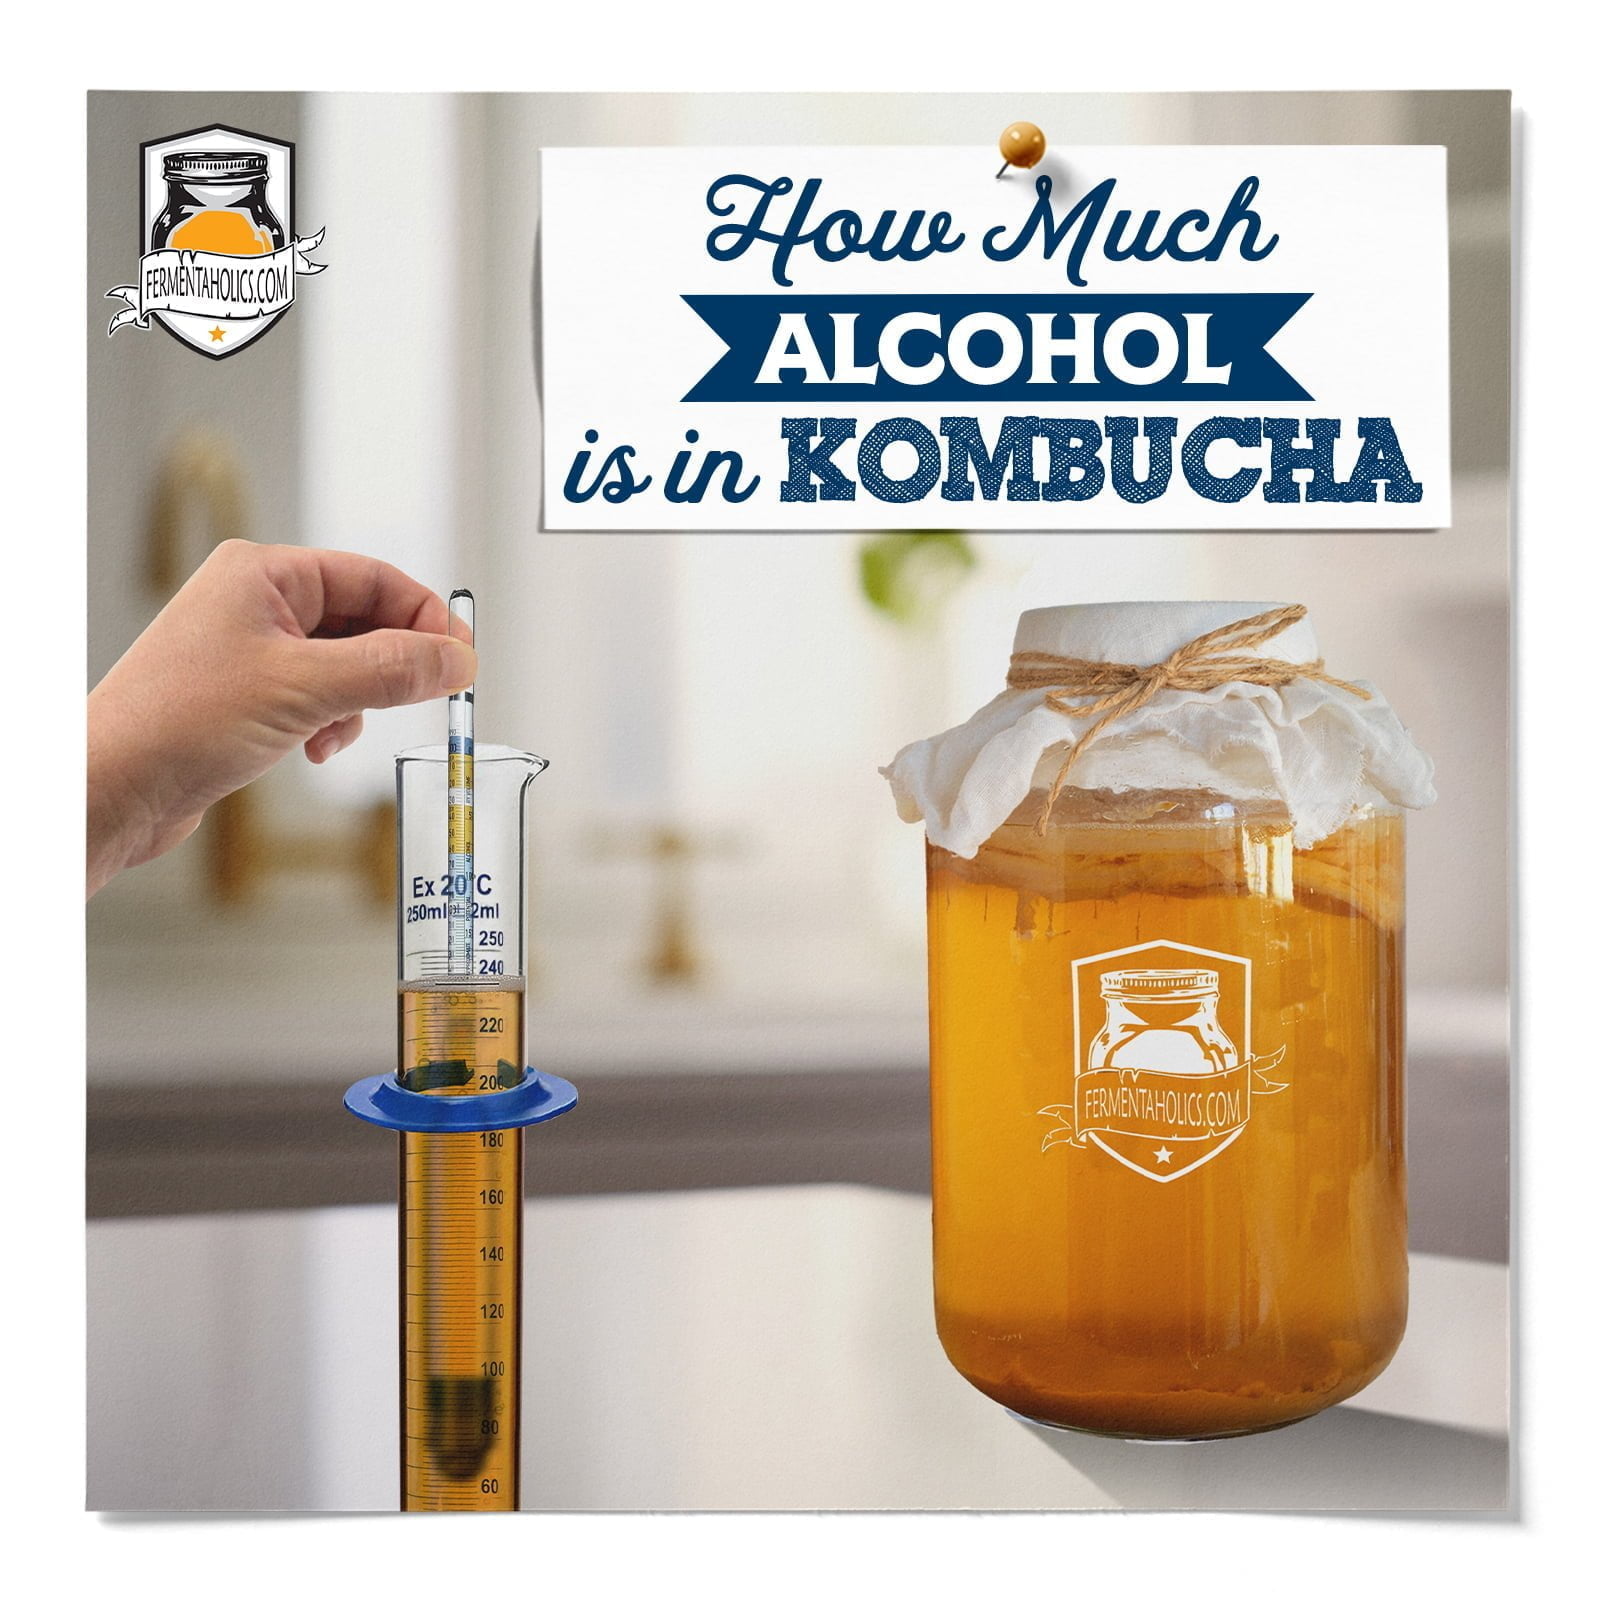 does kombucha have alcohol